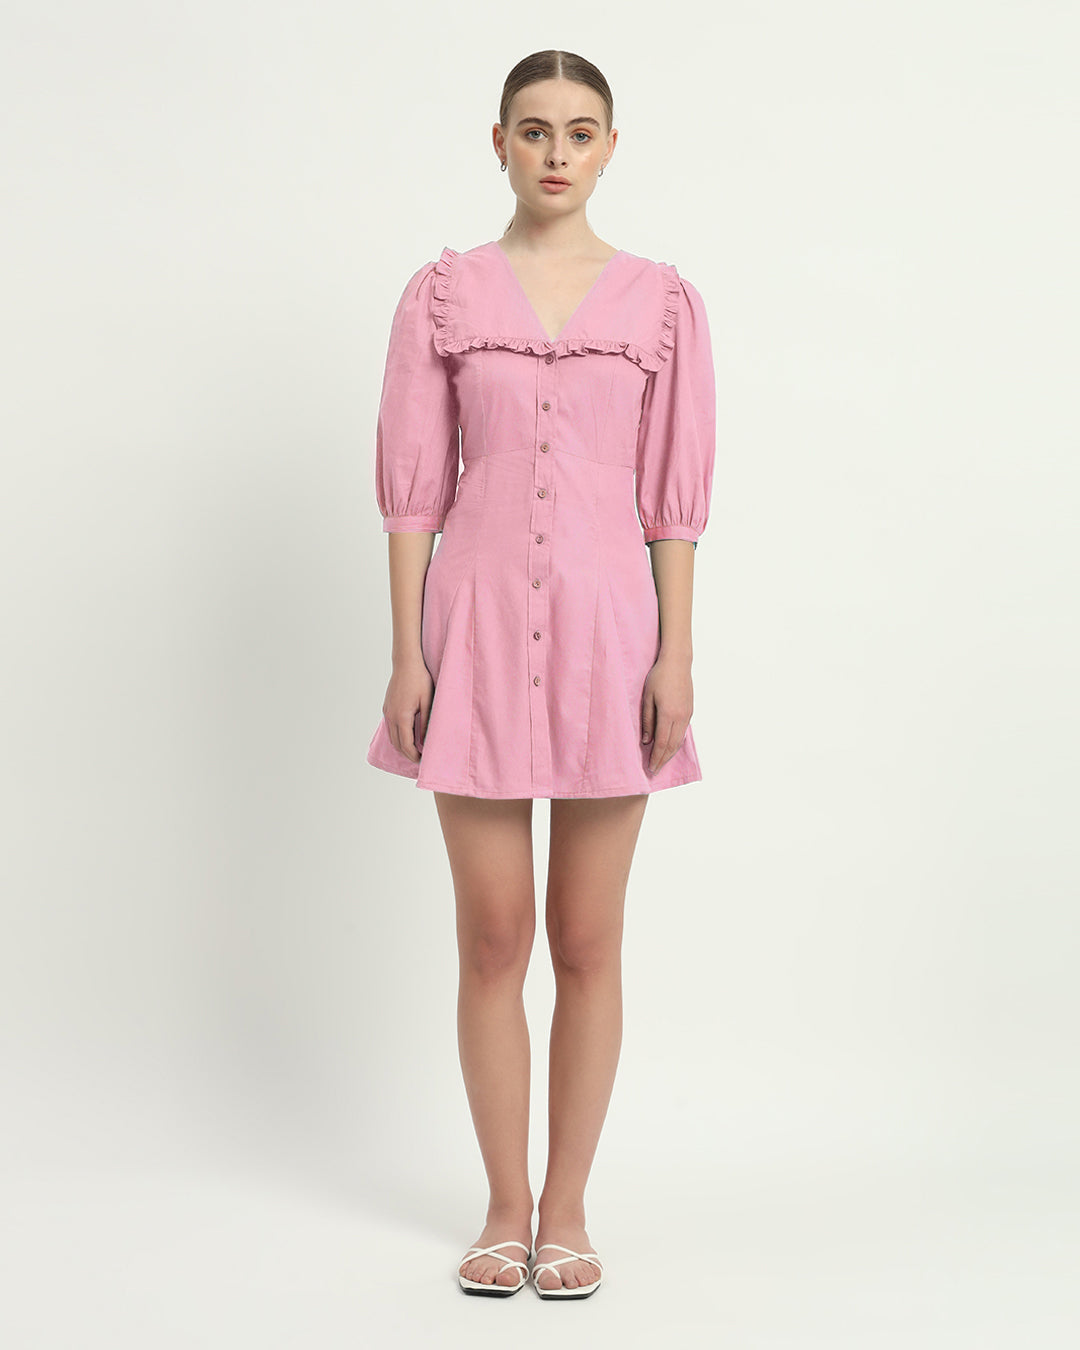 The Isabela Fondant Pink Cotton Dress